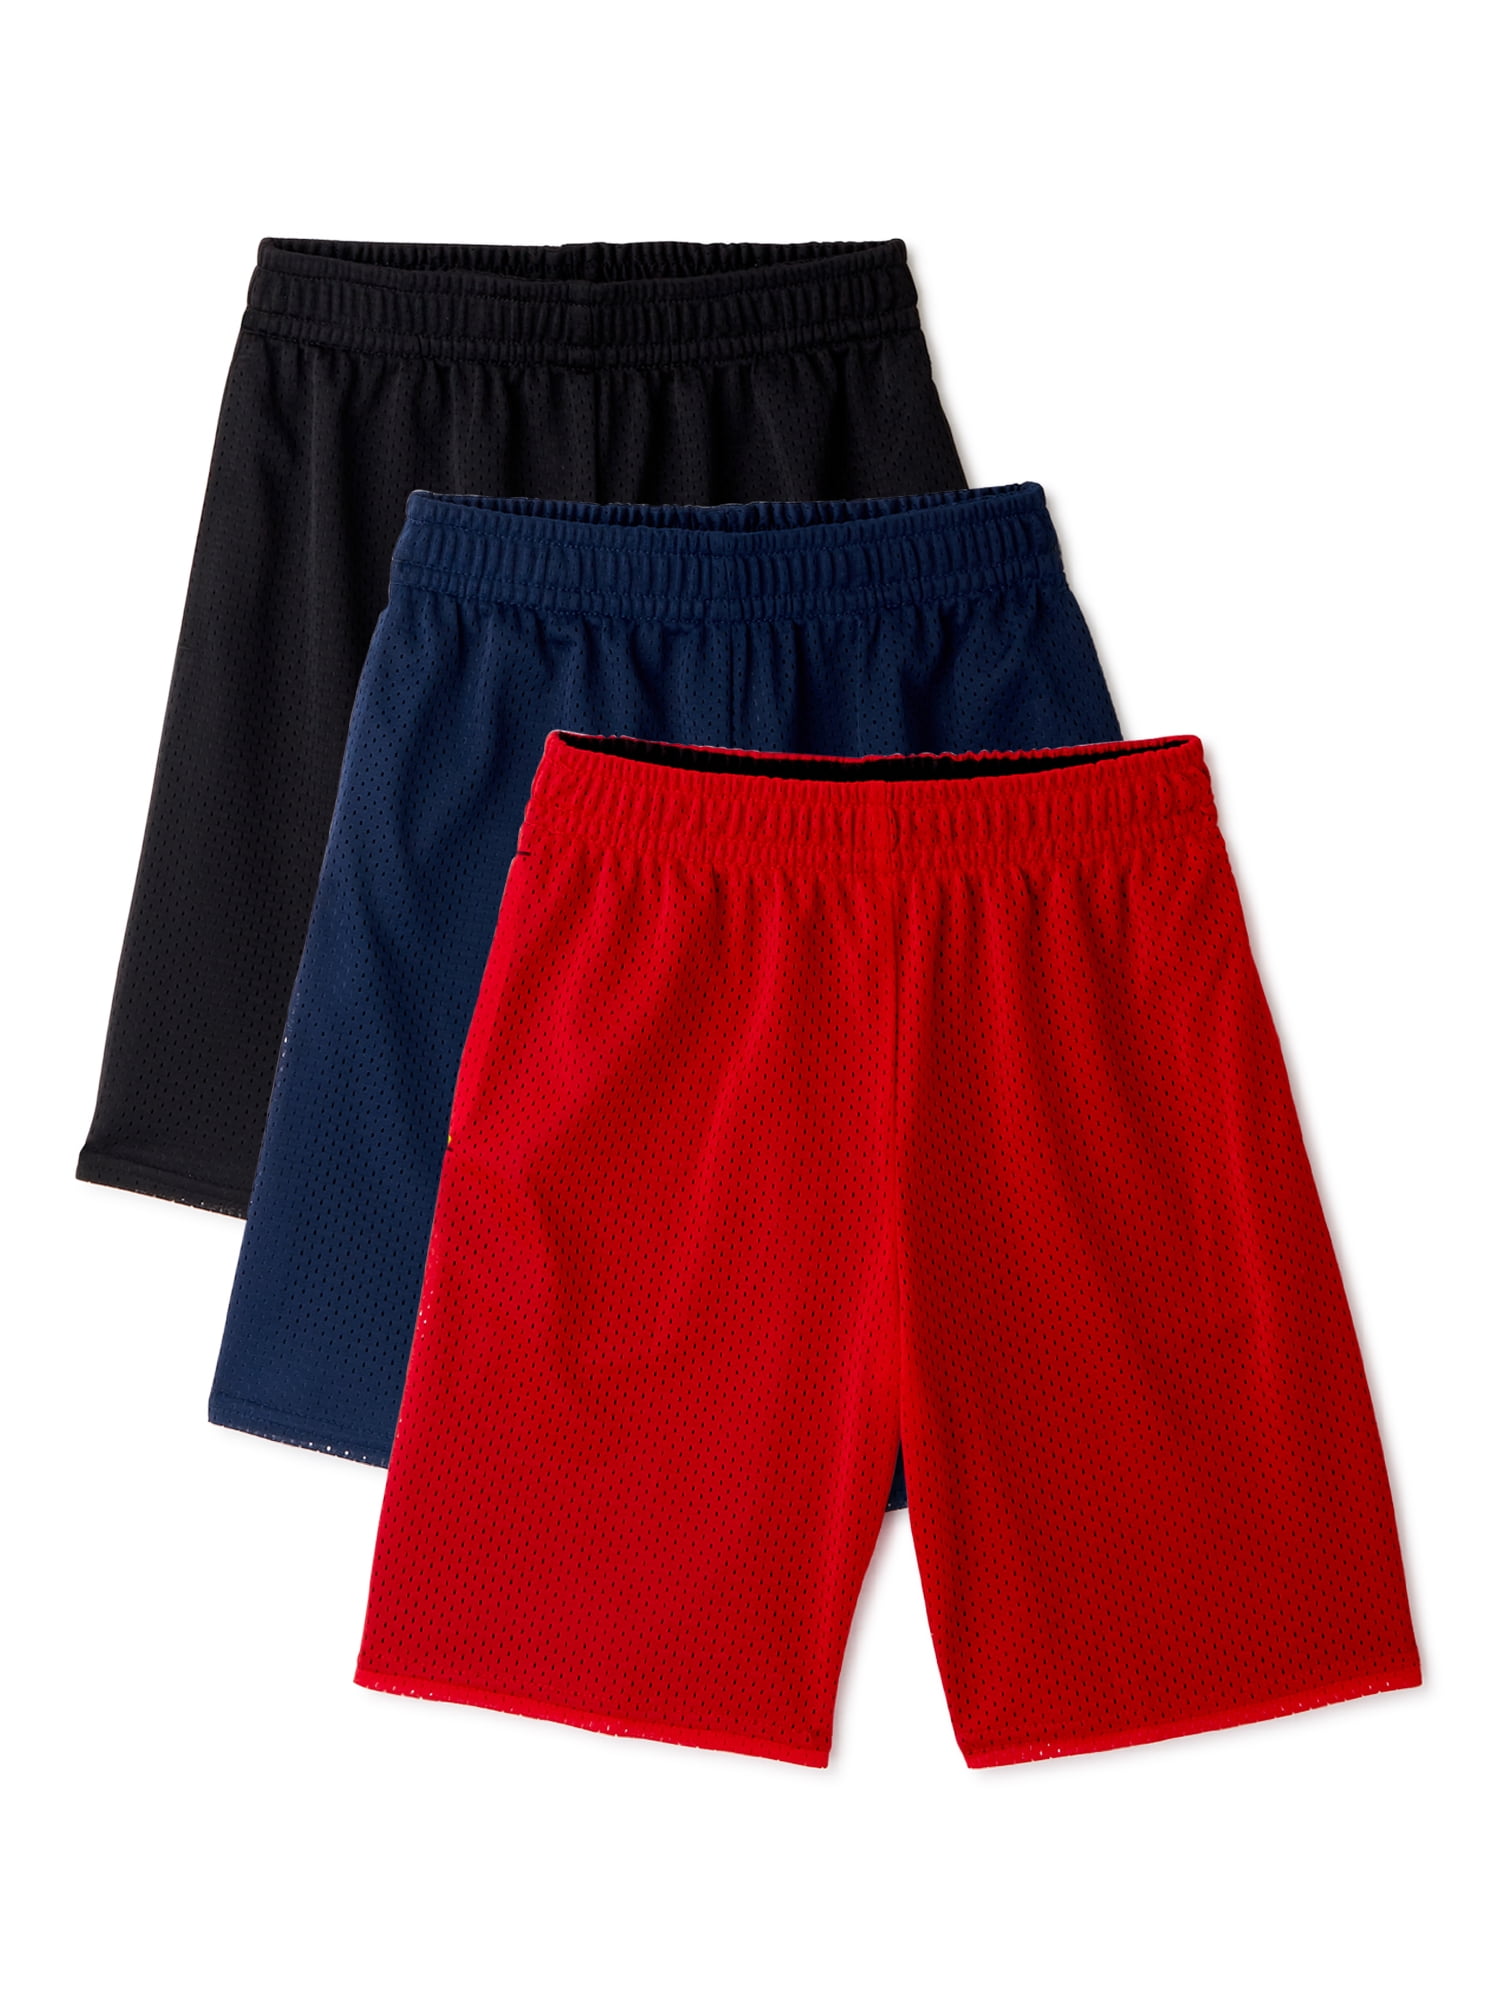 Athletic Works Boys Mesh Shorts, 3-Pack, Sizes 4-18 & Husky - Walmart.com